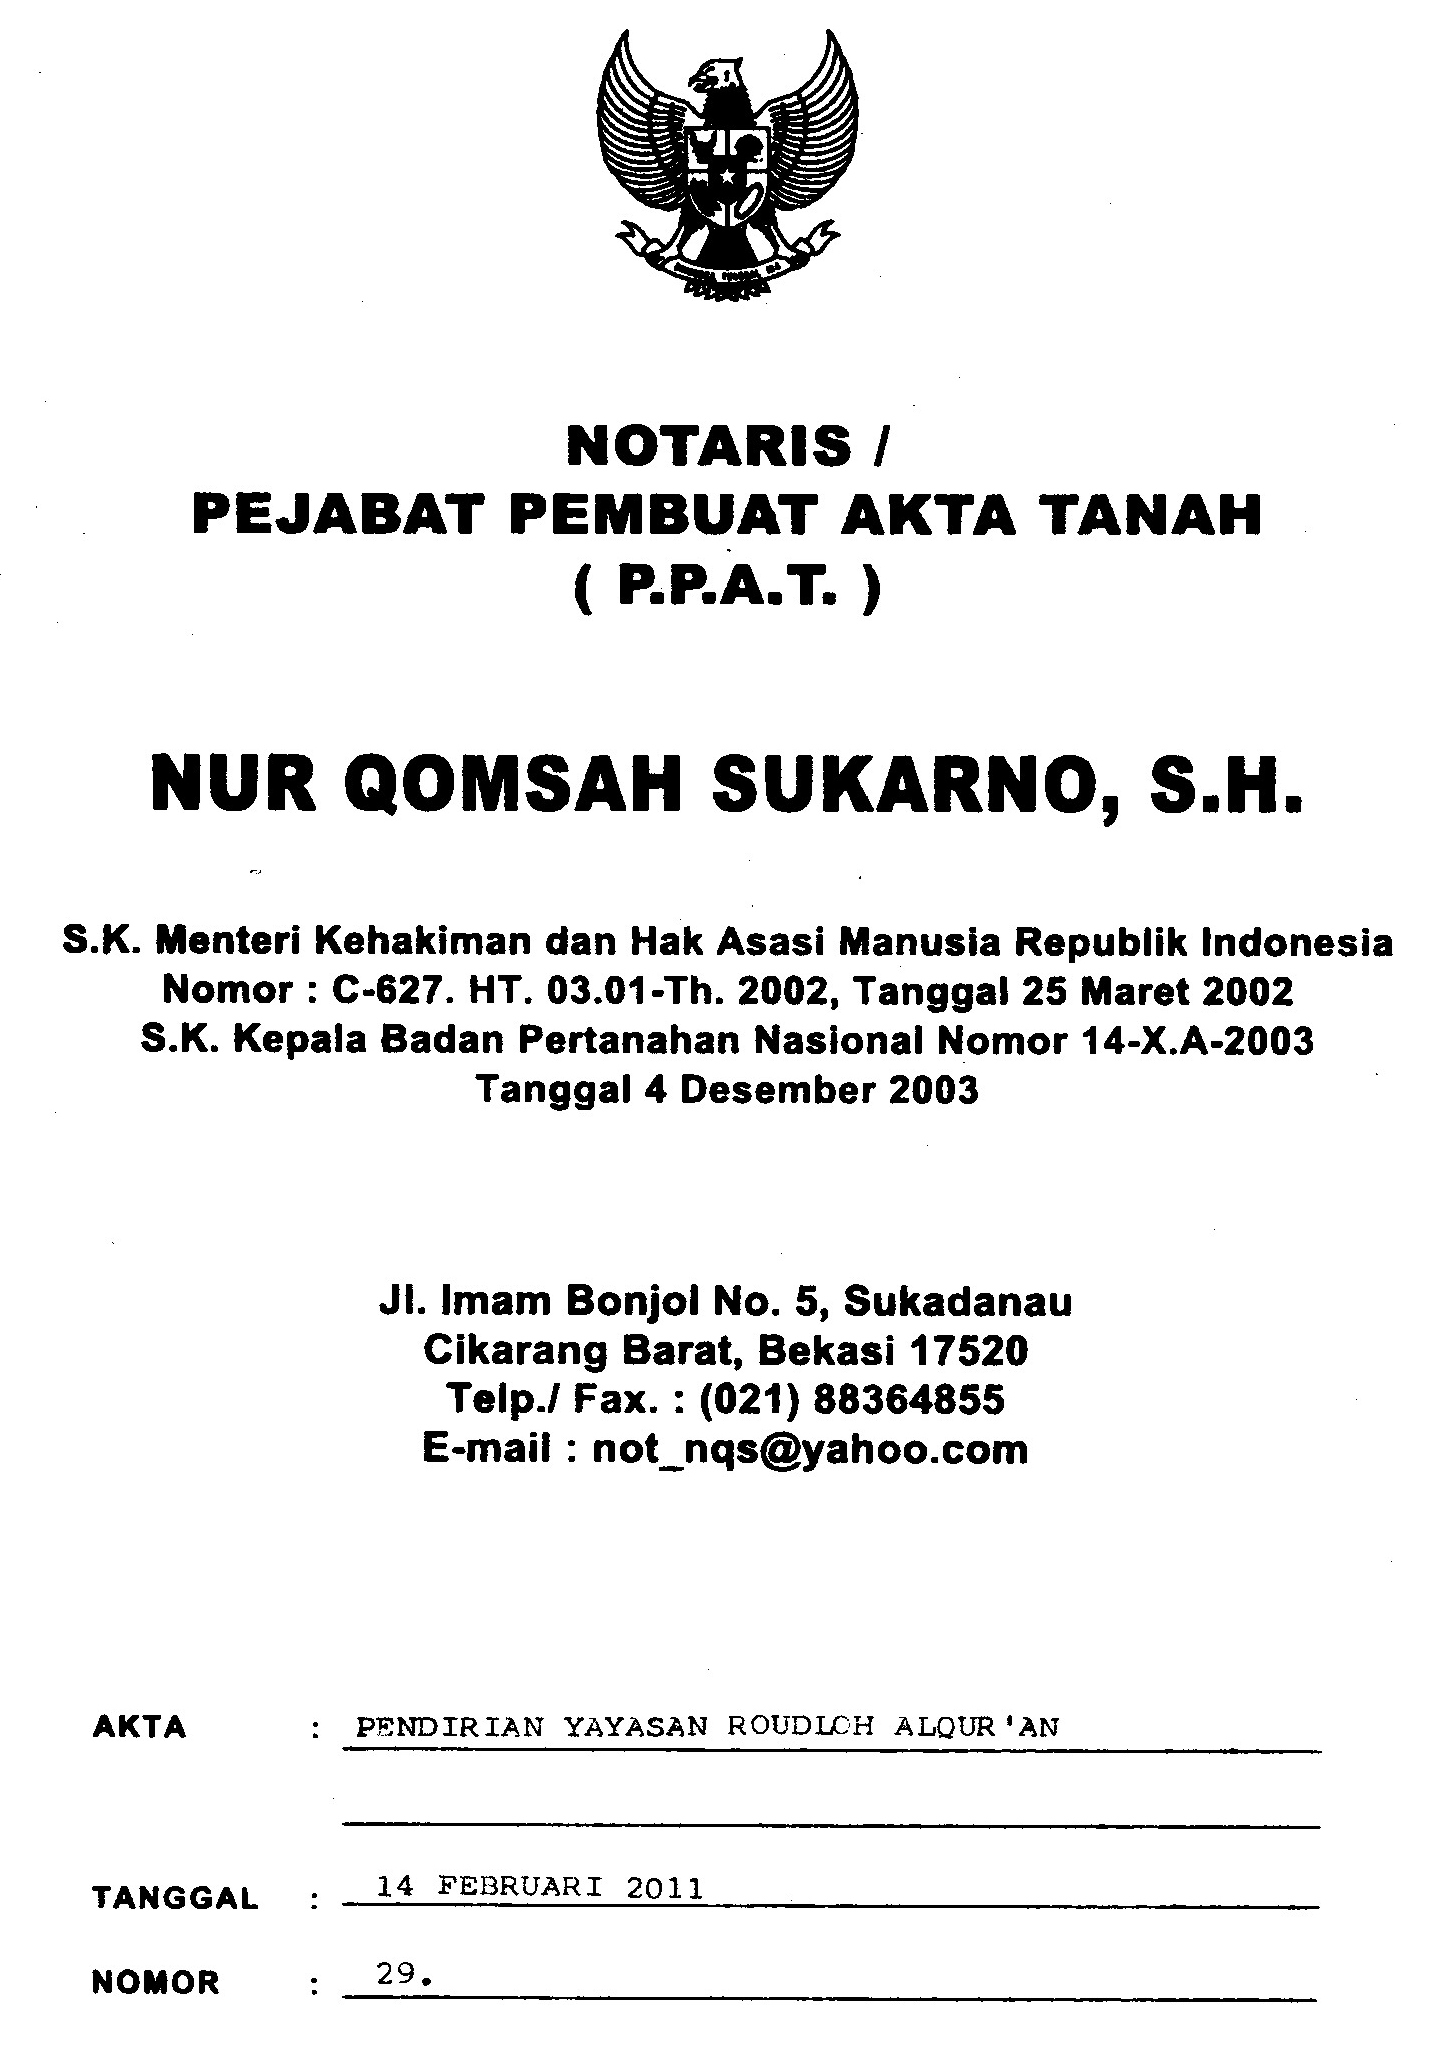 Detail Contoh Nomor Akta Notaris Nomer 29